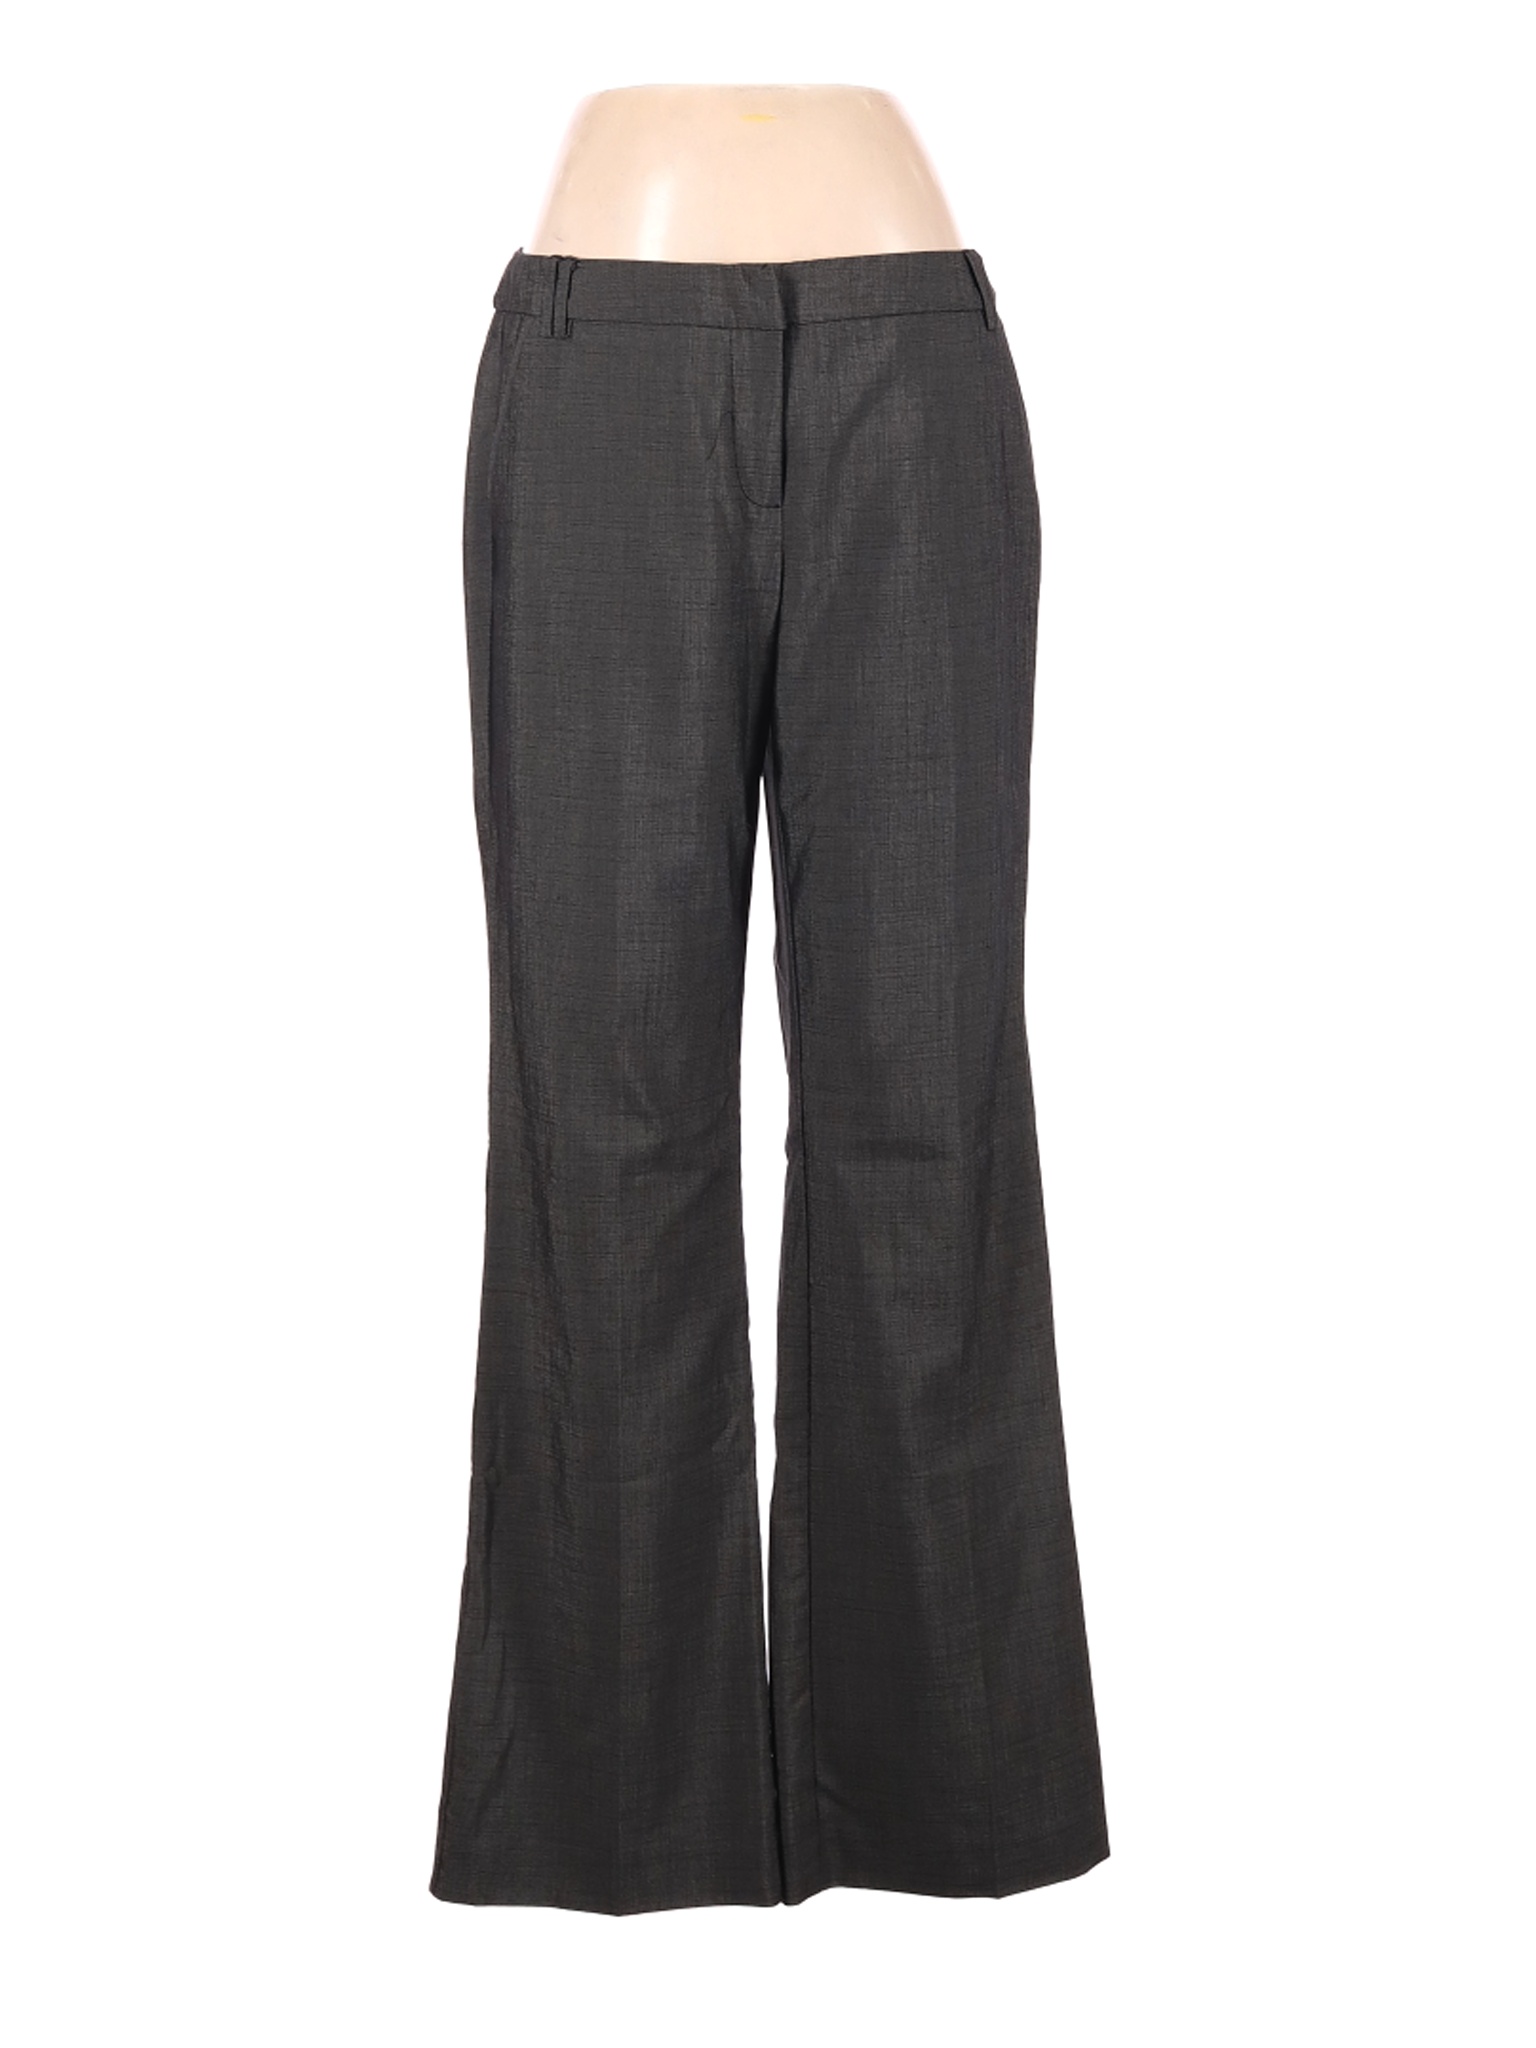 New York & Company Women Gray Dress Pants 8 | eBay